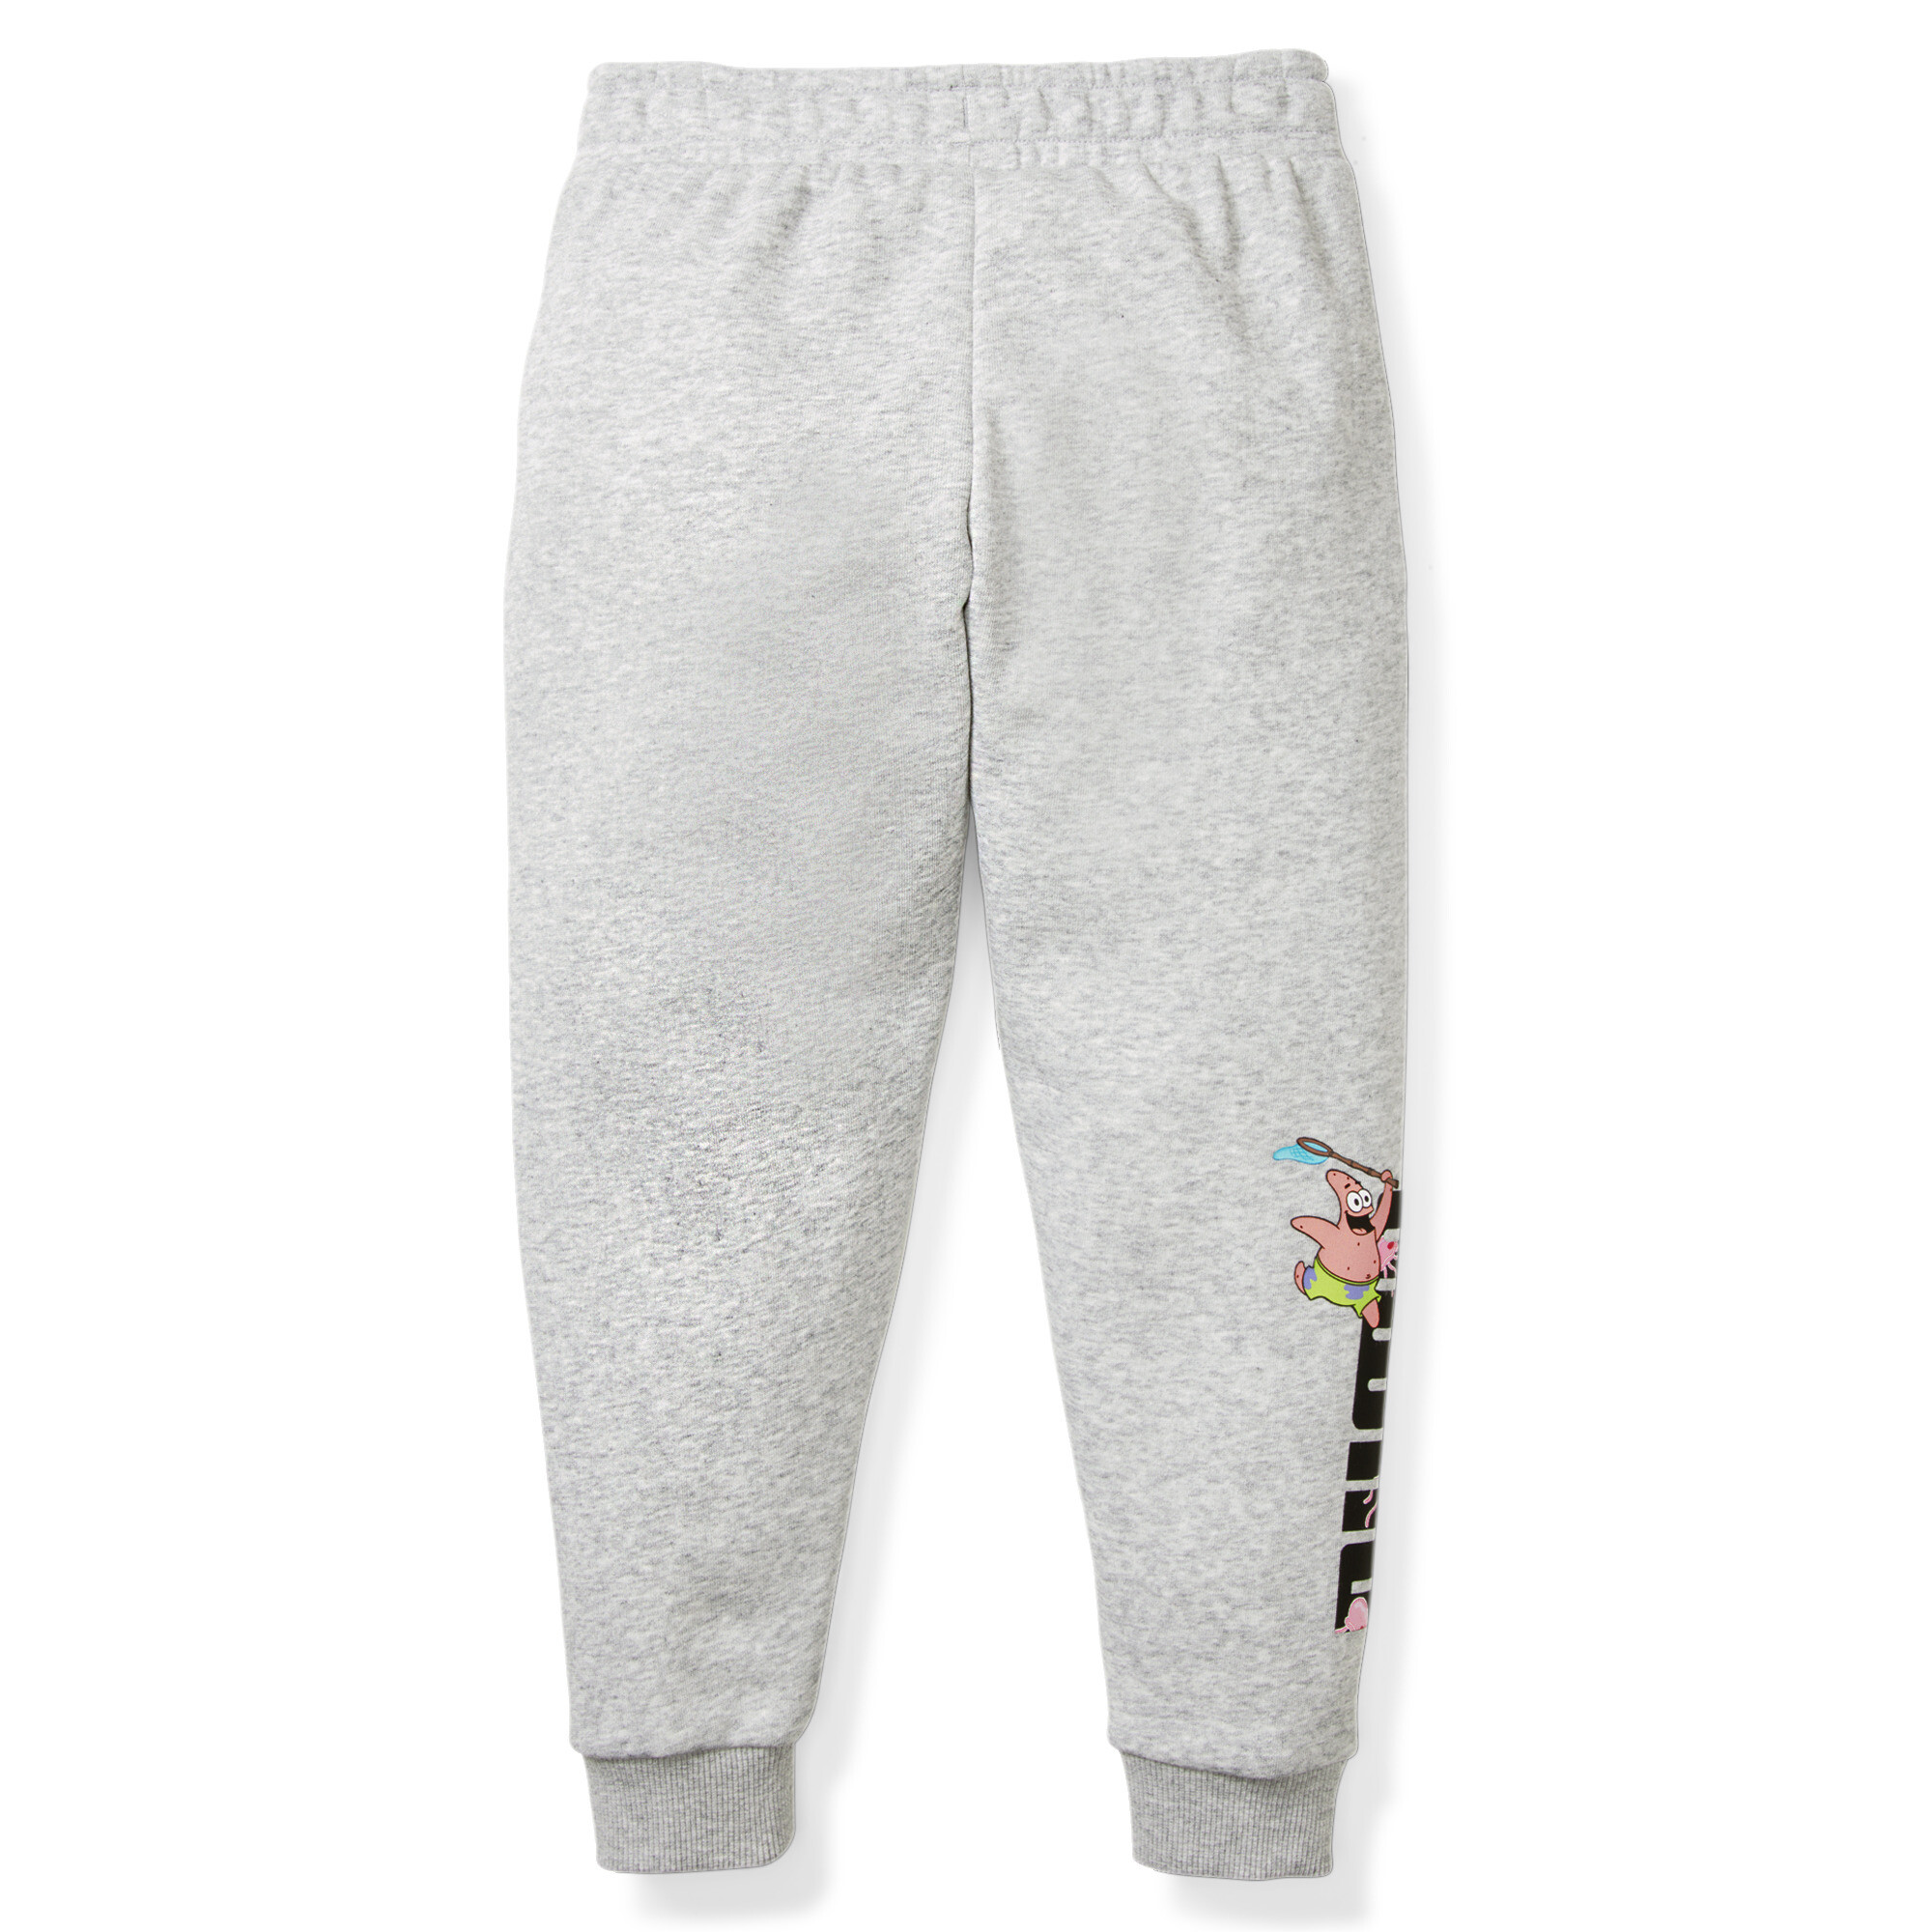 Puma X SPONGEBOB Sweatpants Kids, Gray, Size 2-3Y, Clothing